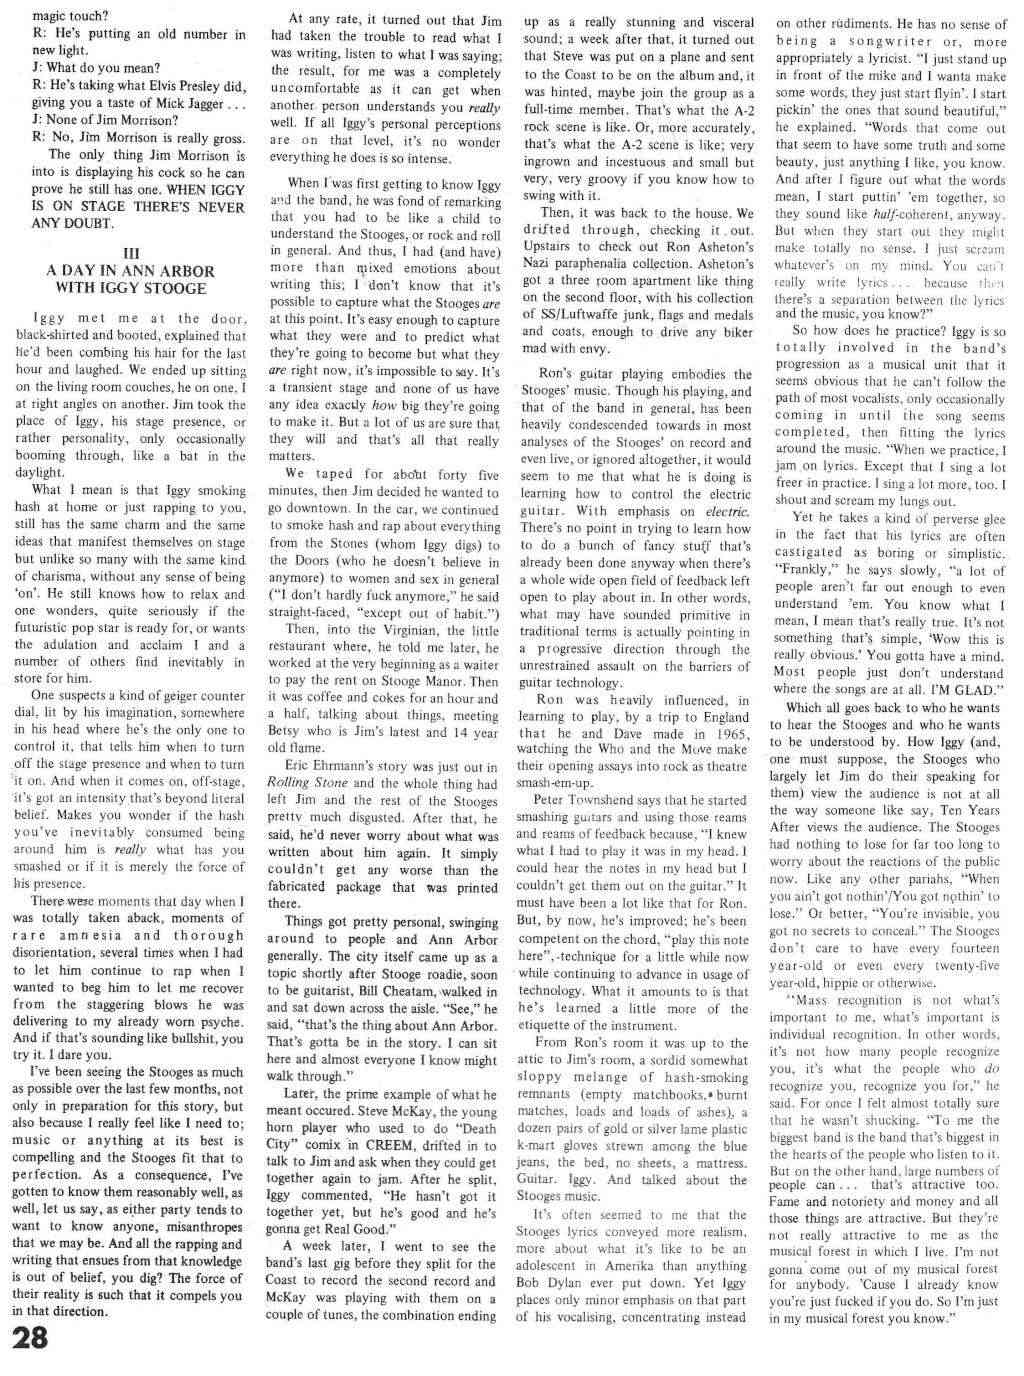 Stooges Article Zigzag 1970 Zigzag17